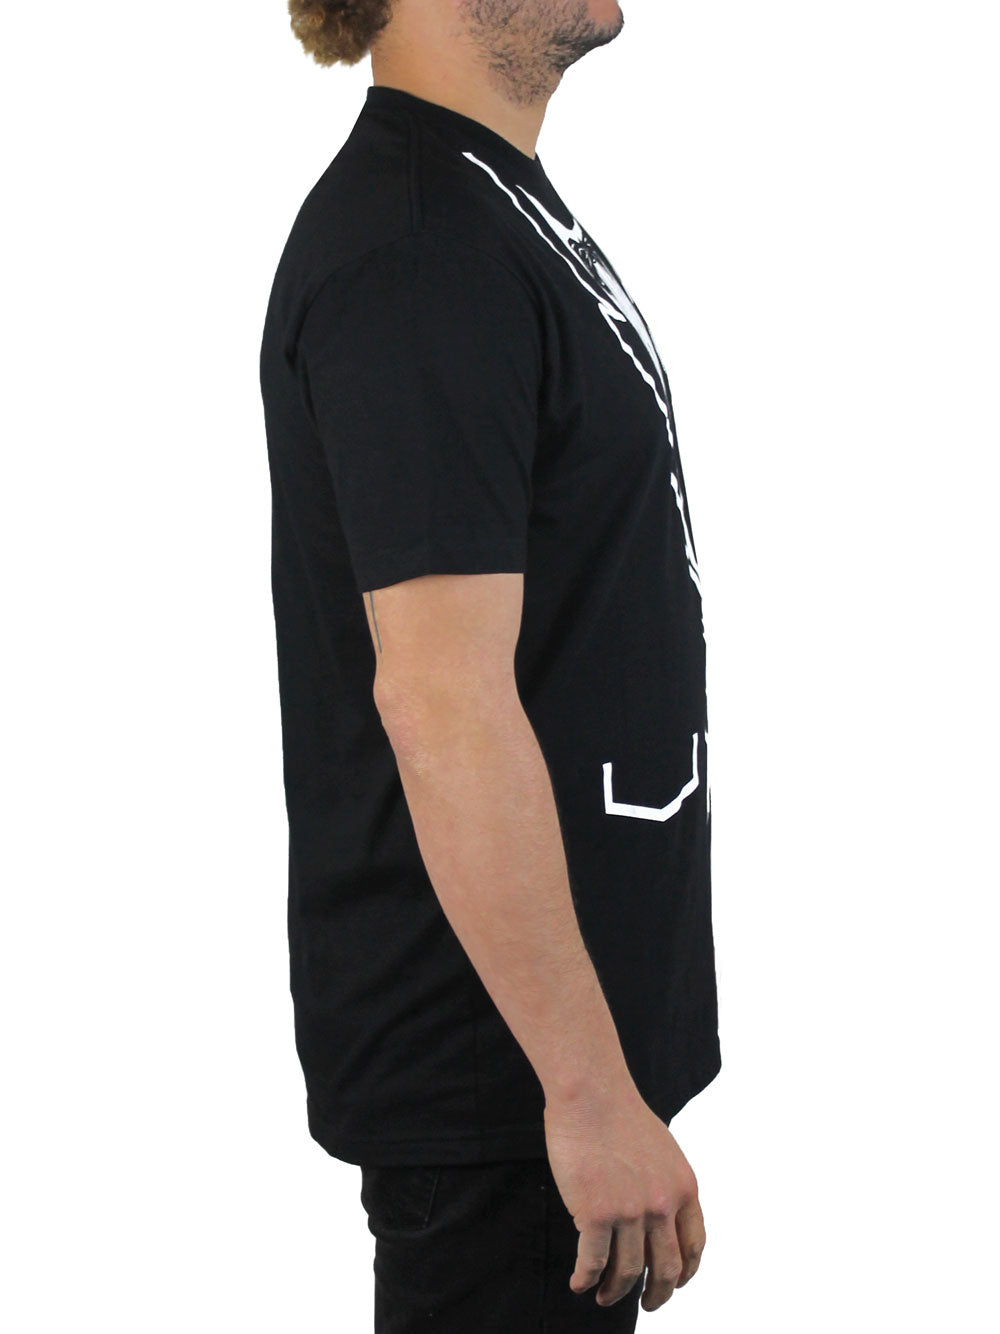 Tuxedo T-Shirt - Black Tuxedo T-Shirt - 80's Tuxedo Shirt Men's LG